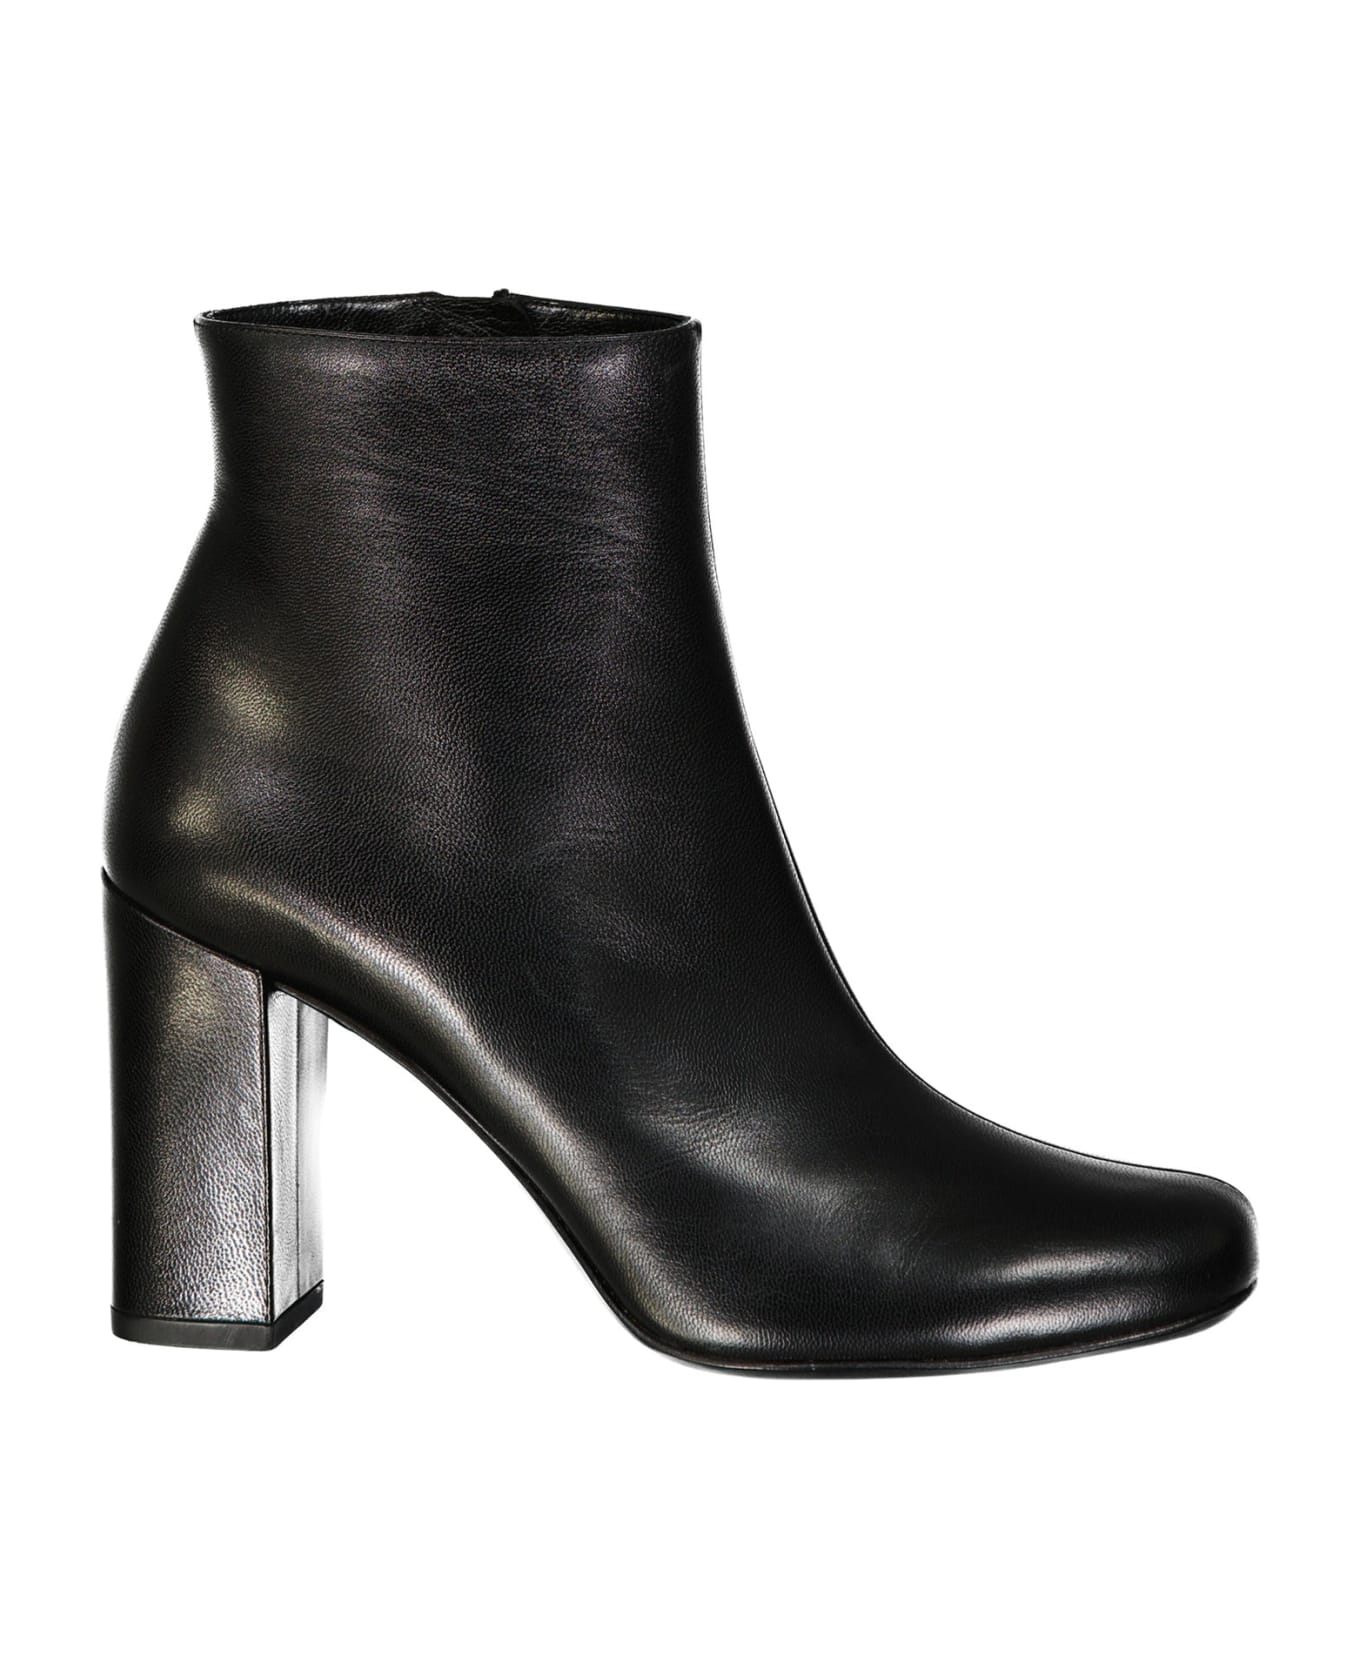 Saint Laurent Leather Ankle Boots - Black ブーツ